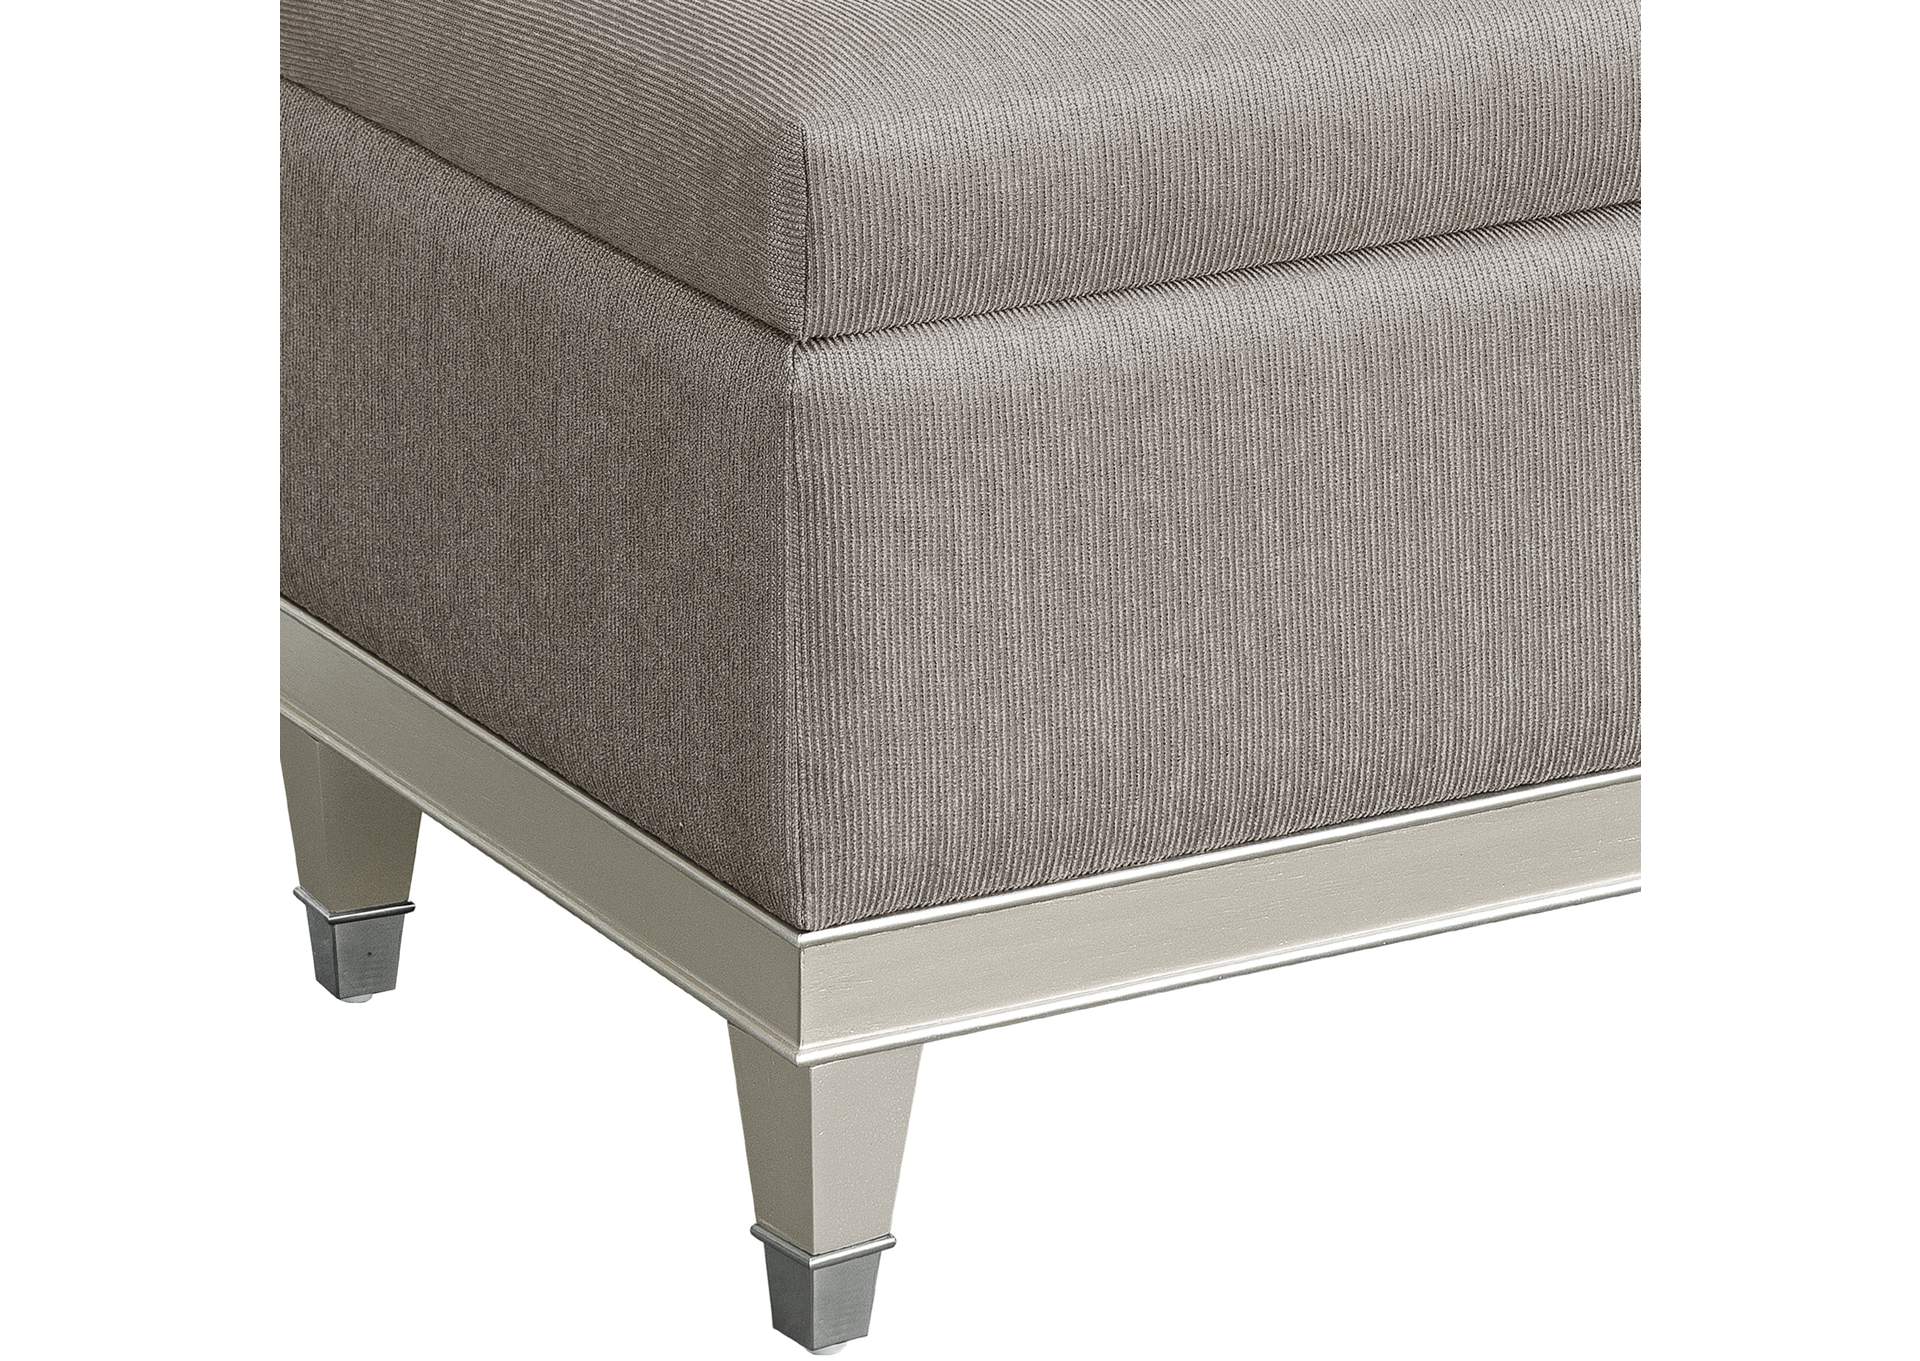 Zoey Vanity Upholstered Storage Bench,Pulaski Furniture